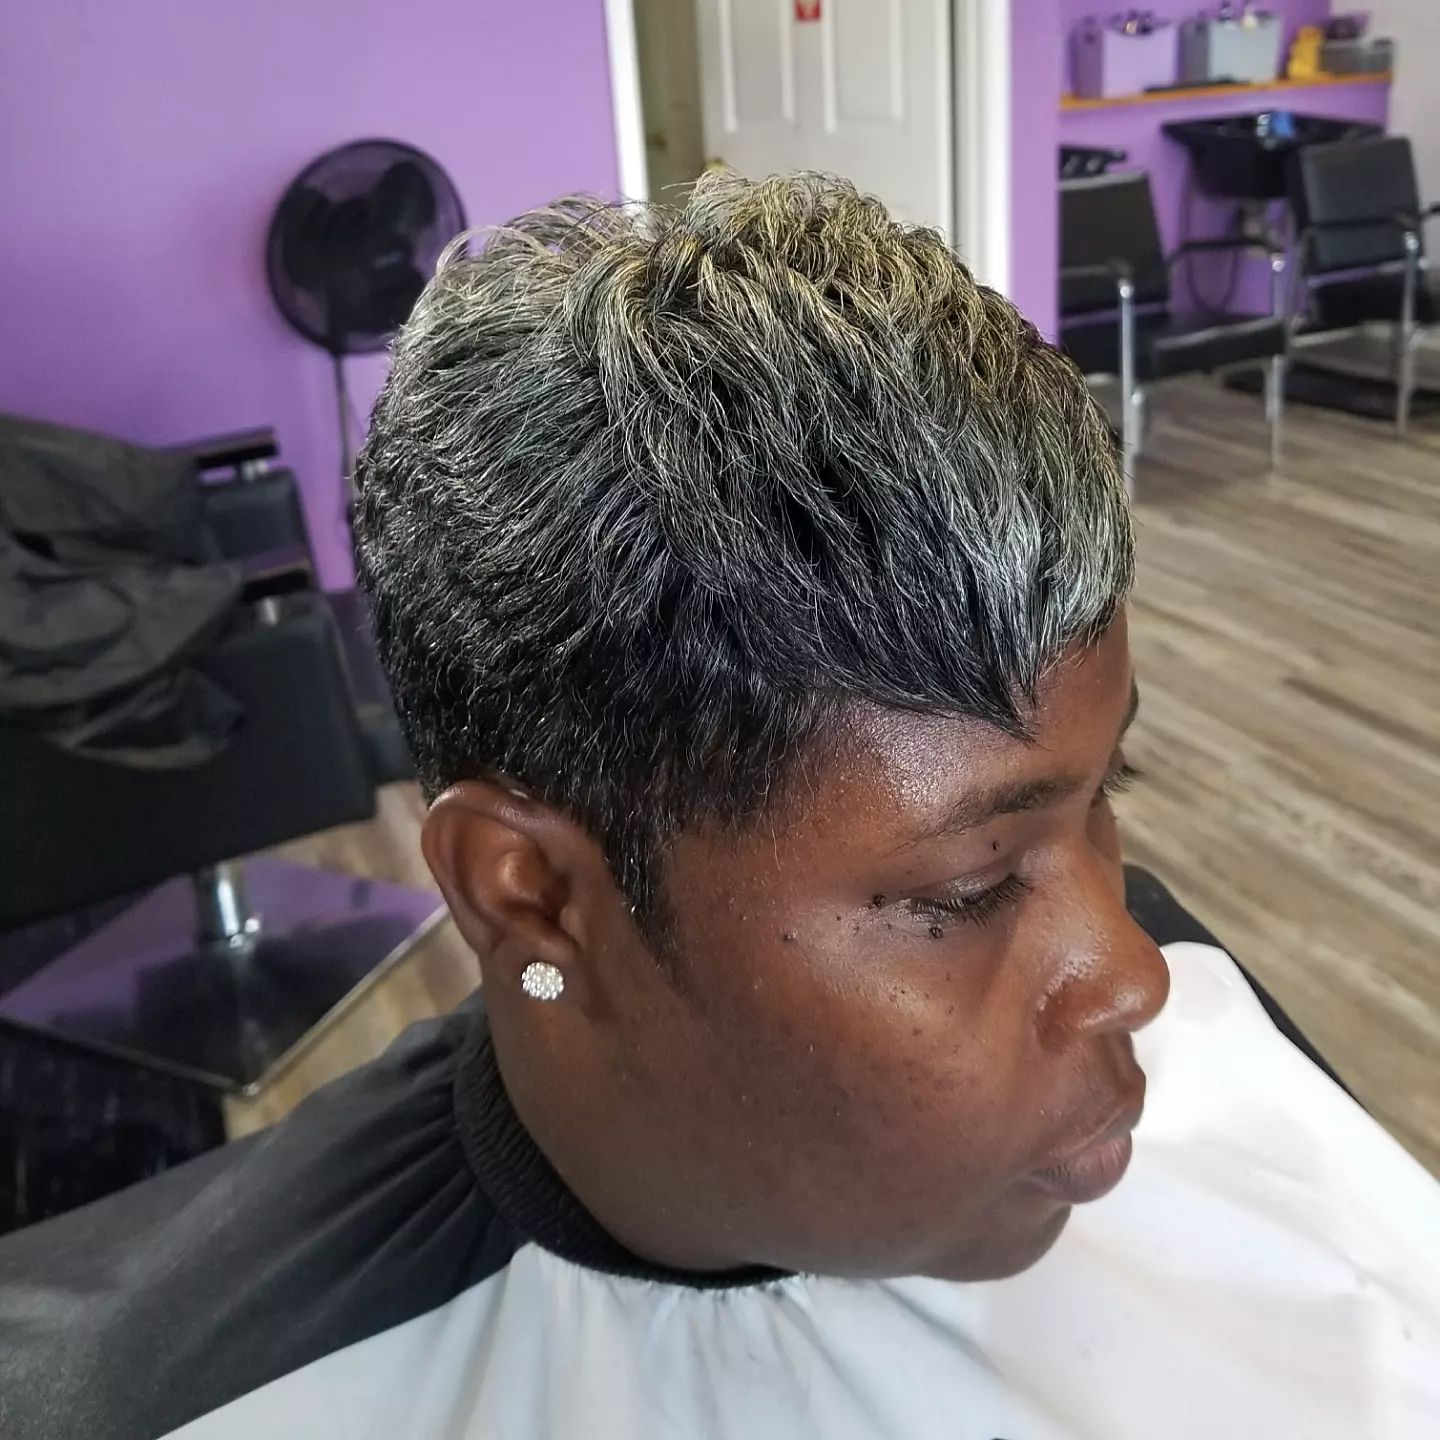 Diamond Hair Studio 1018 State Hwy 755, Edgewood Maryland 21040